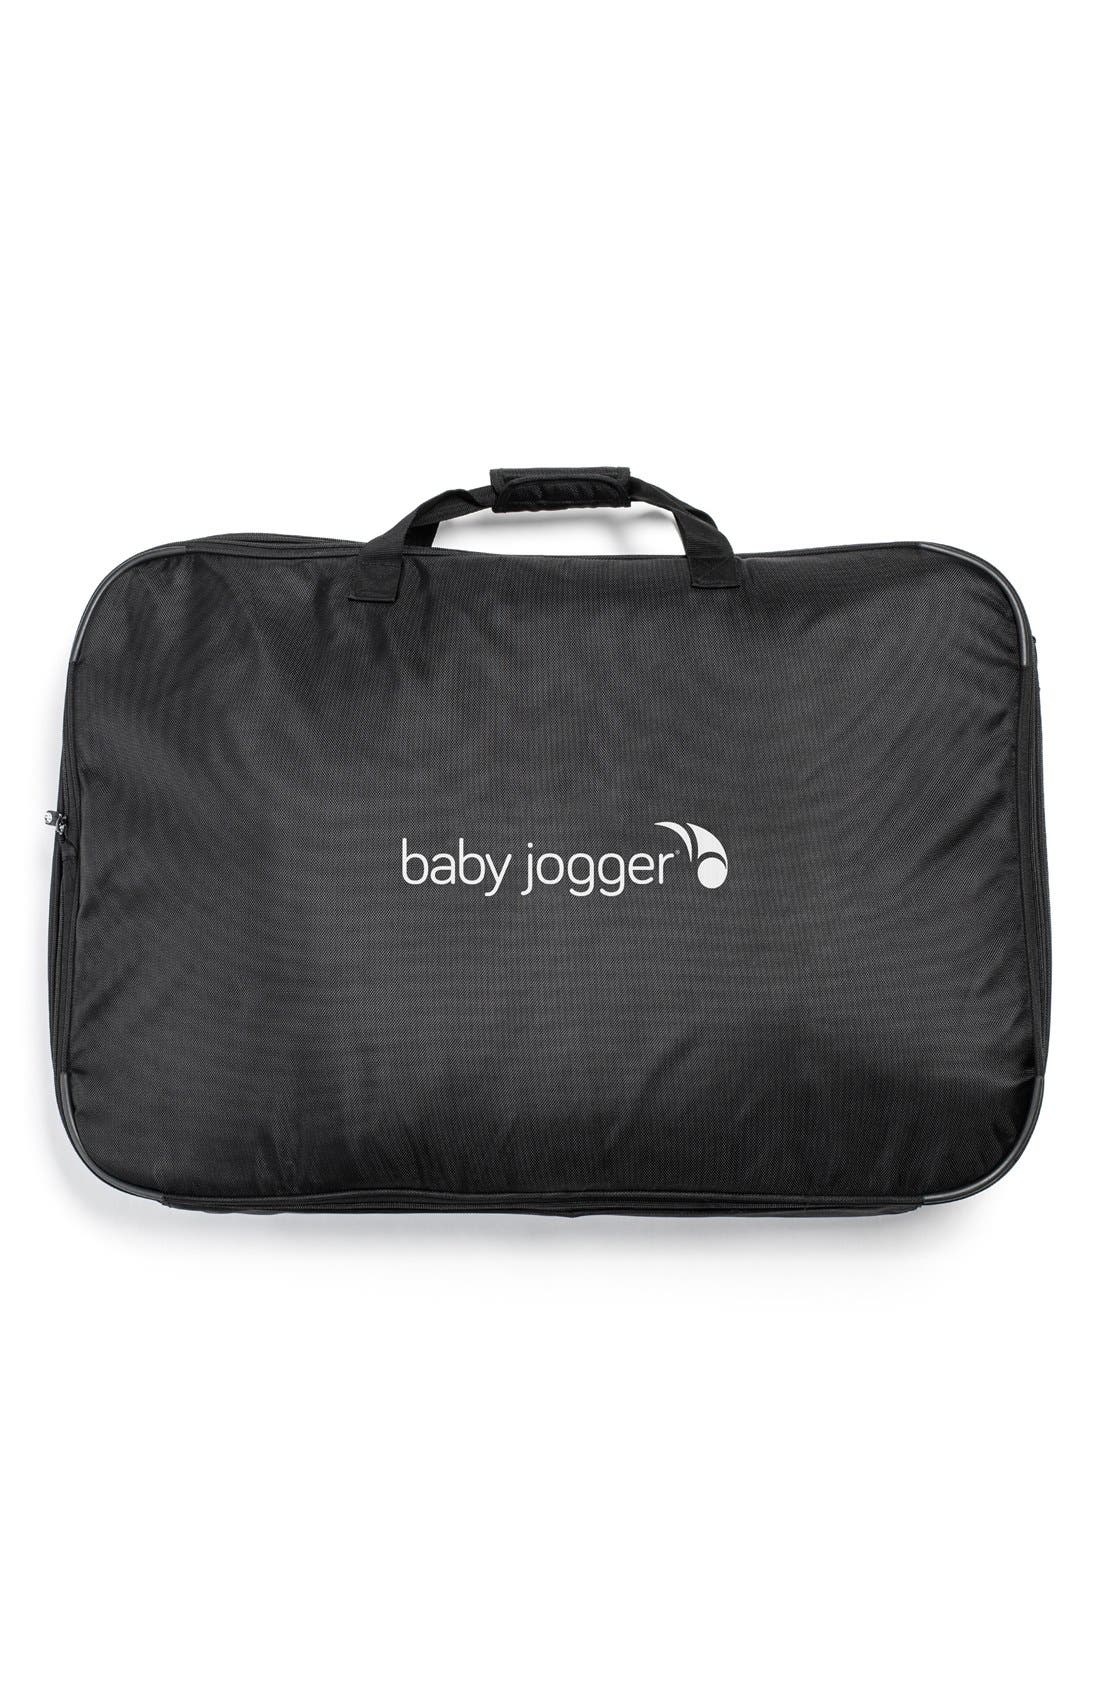 baby jogger city mini gt bag